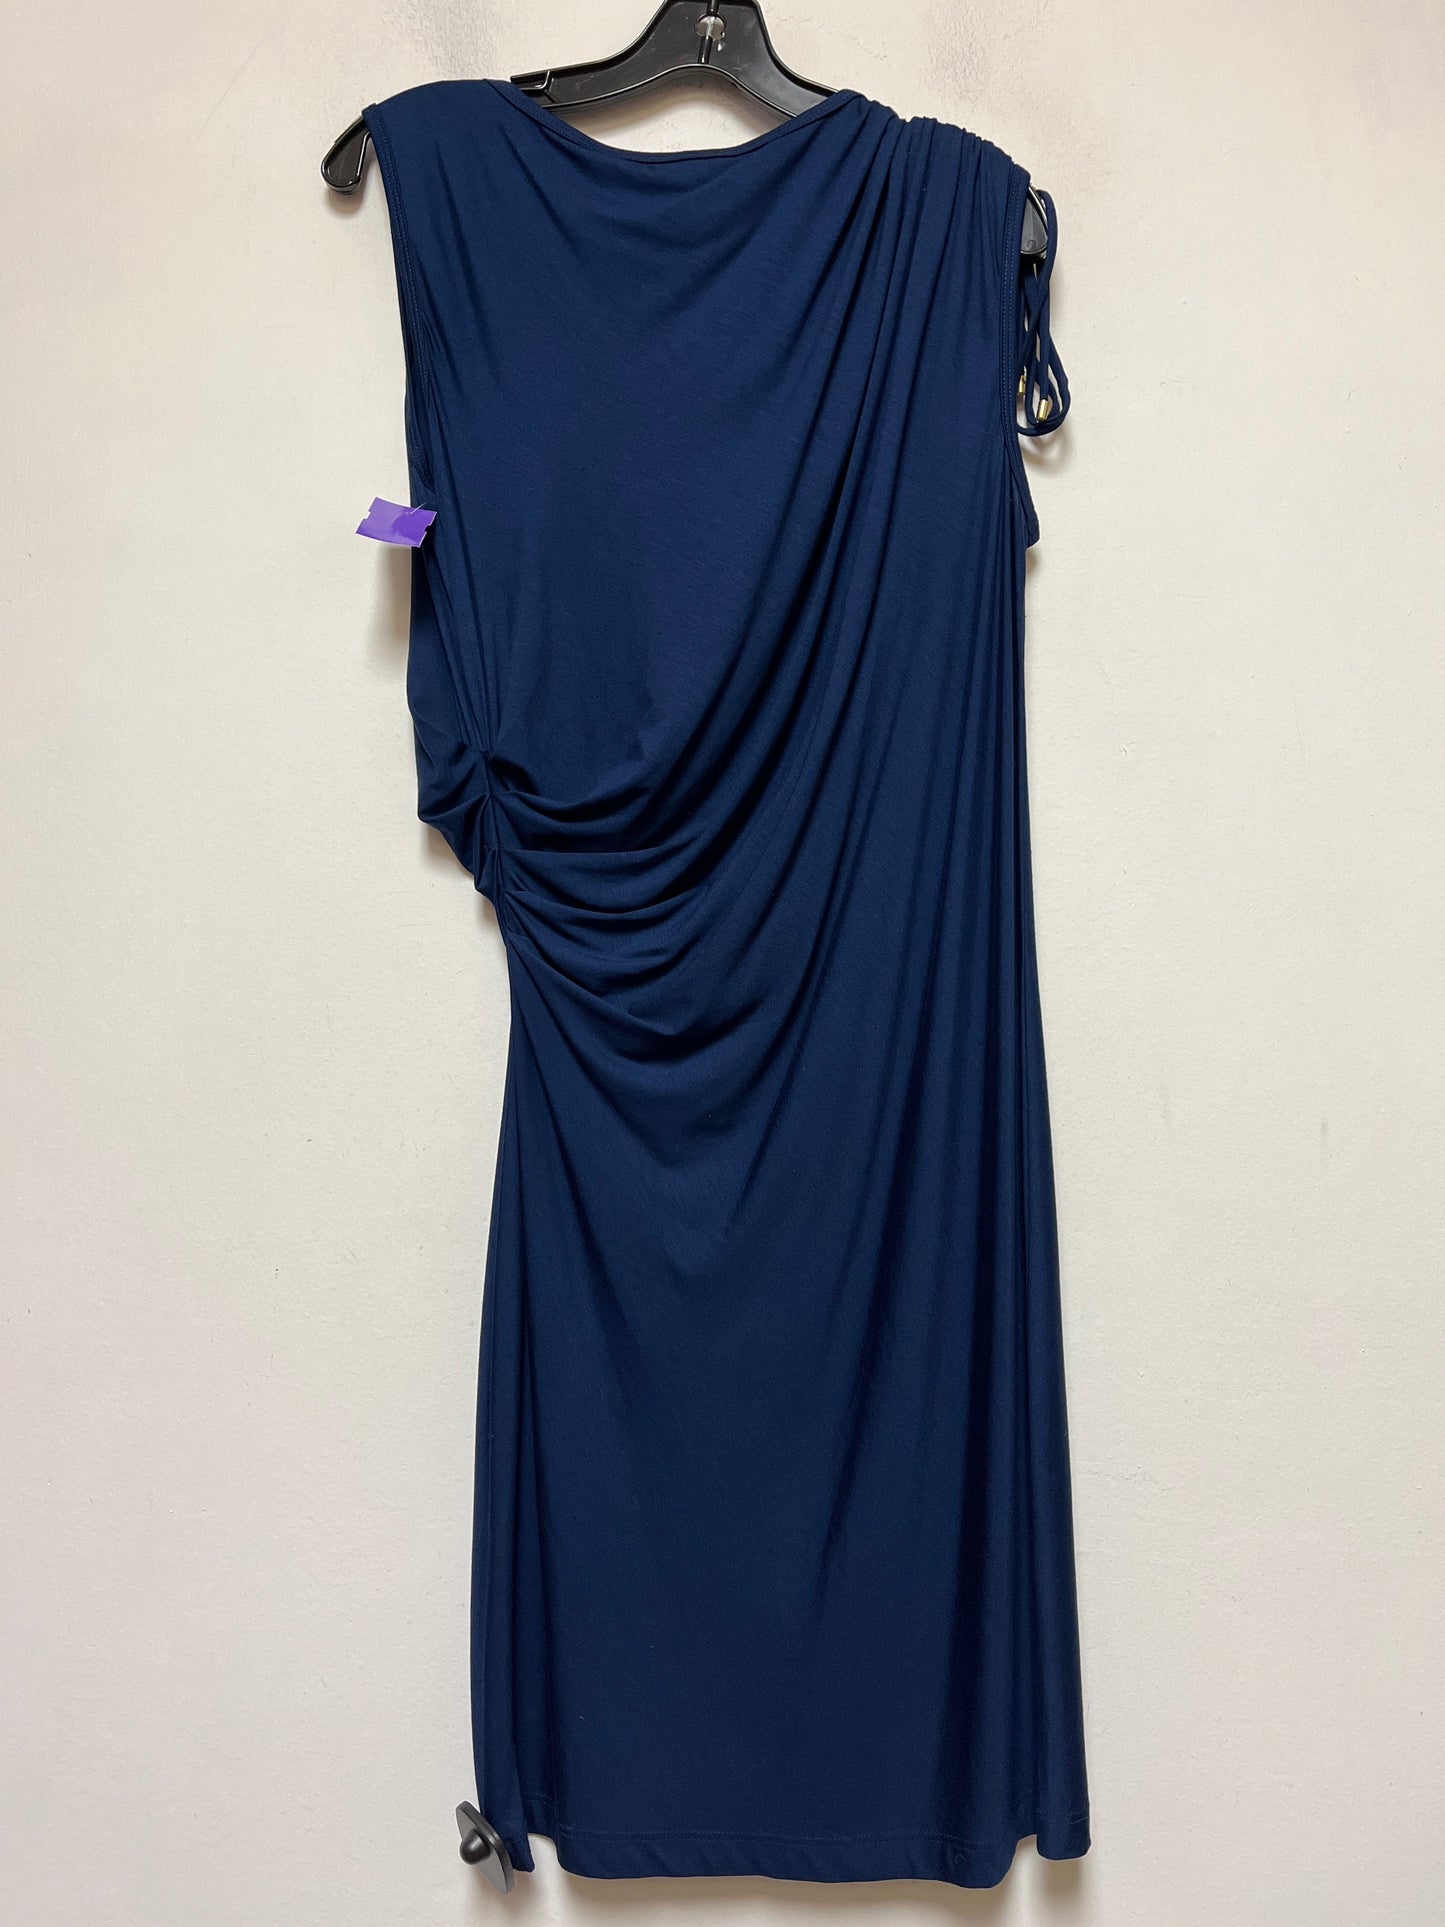 Dress Casual Short By Trina Turk  Size: Xs